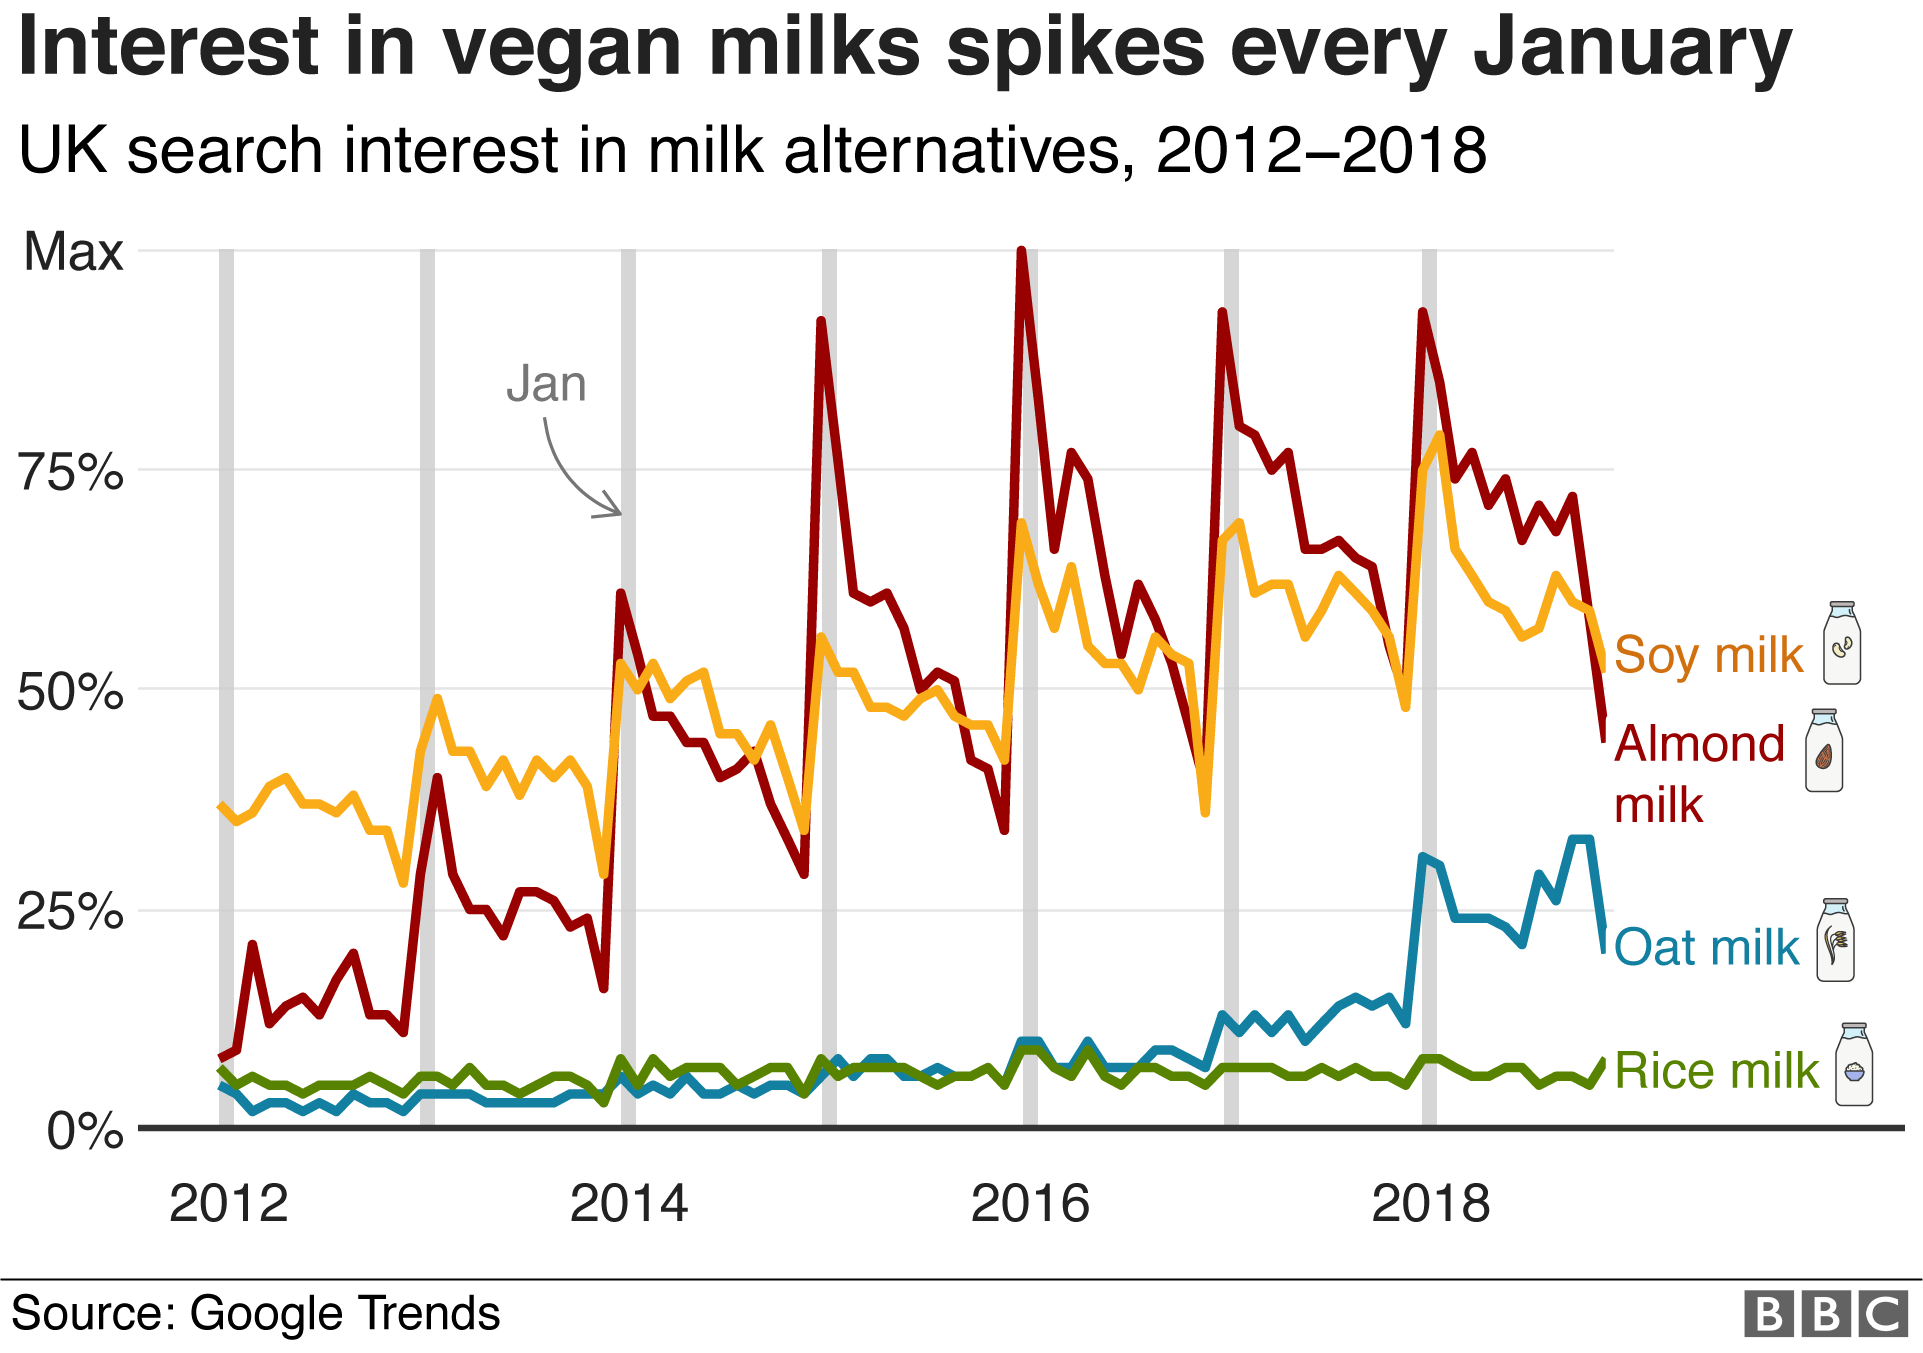 Vegan Conversion Chart